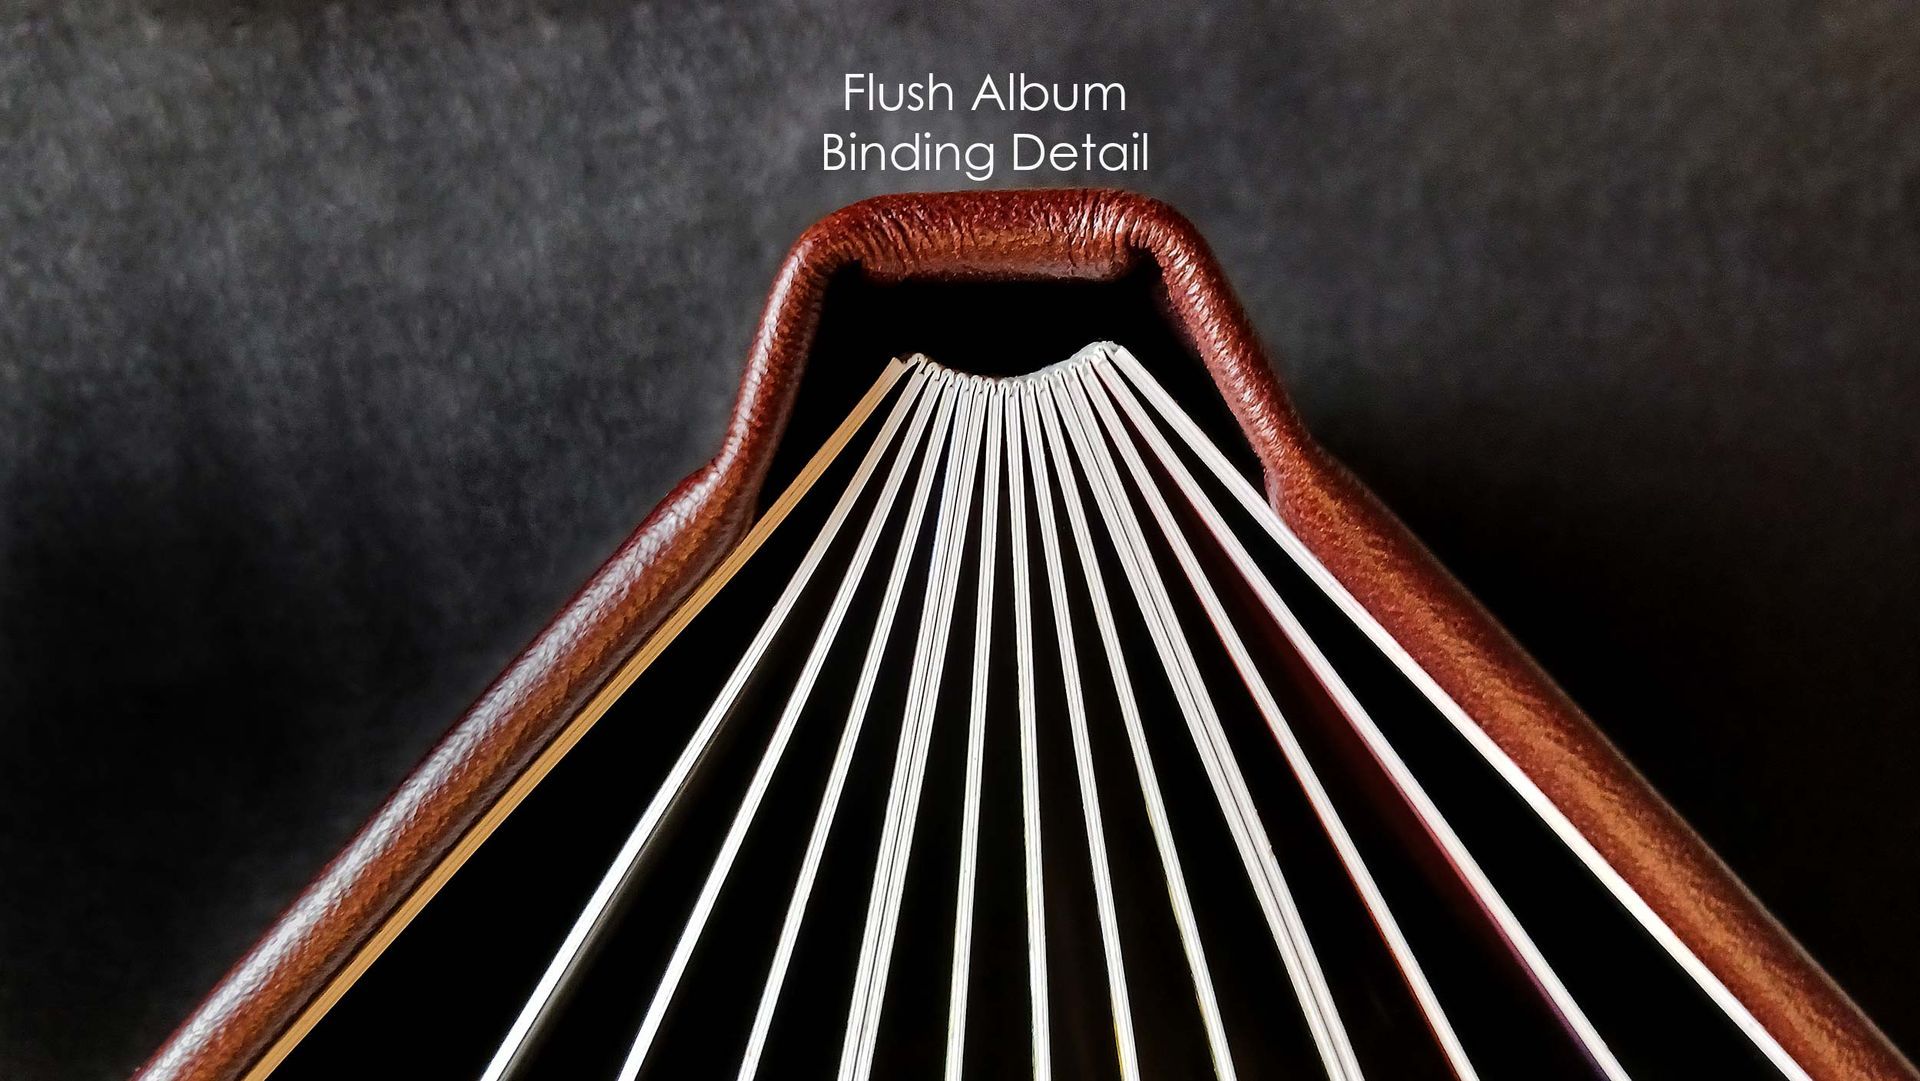 a close up of a flush album binding detail